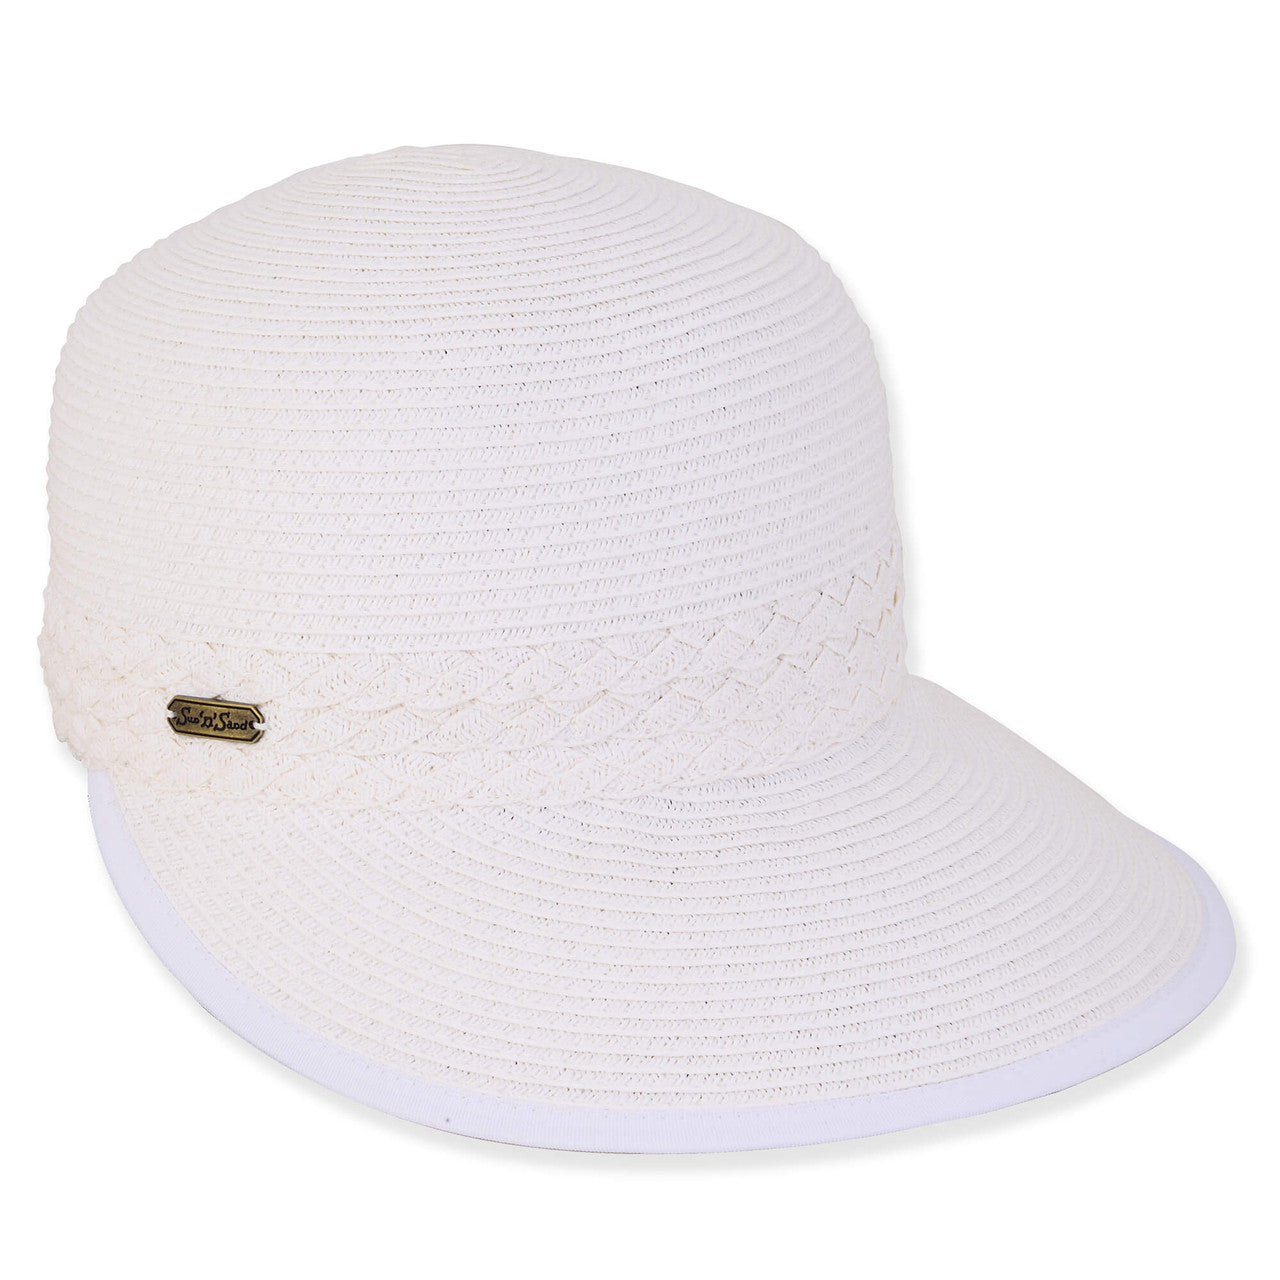 Criss Cross Woven Straw Brim Cap - Sun 'N' Sand Hats Facesaver Hat Sun N Sand Hats HH1821A White M/L (57-59 cm) Elastic Stretch Closure